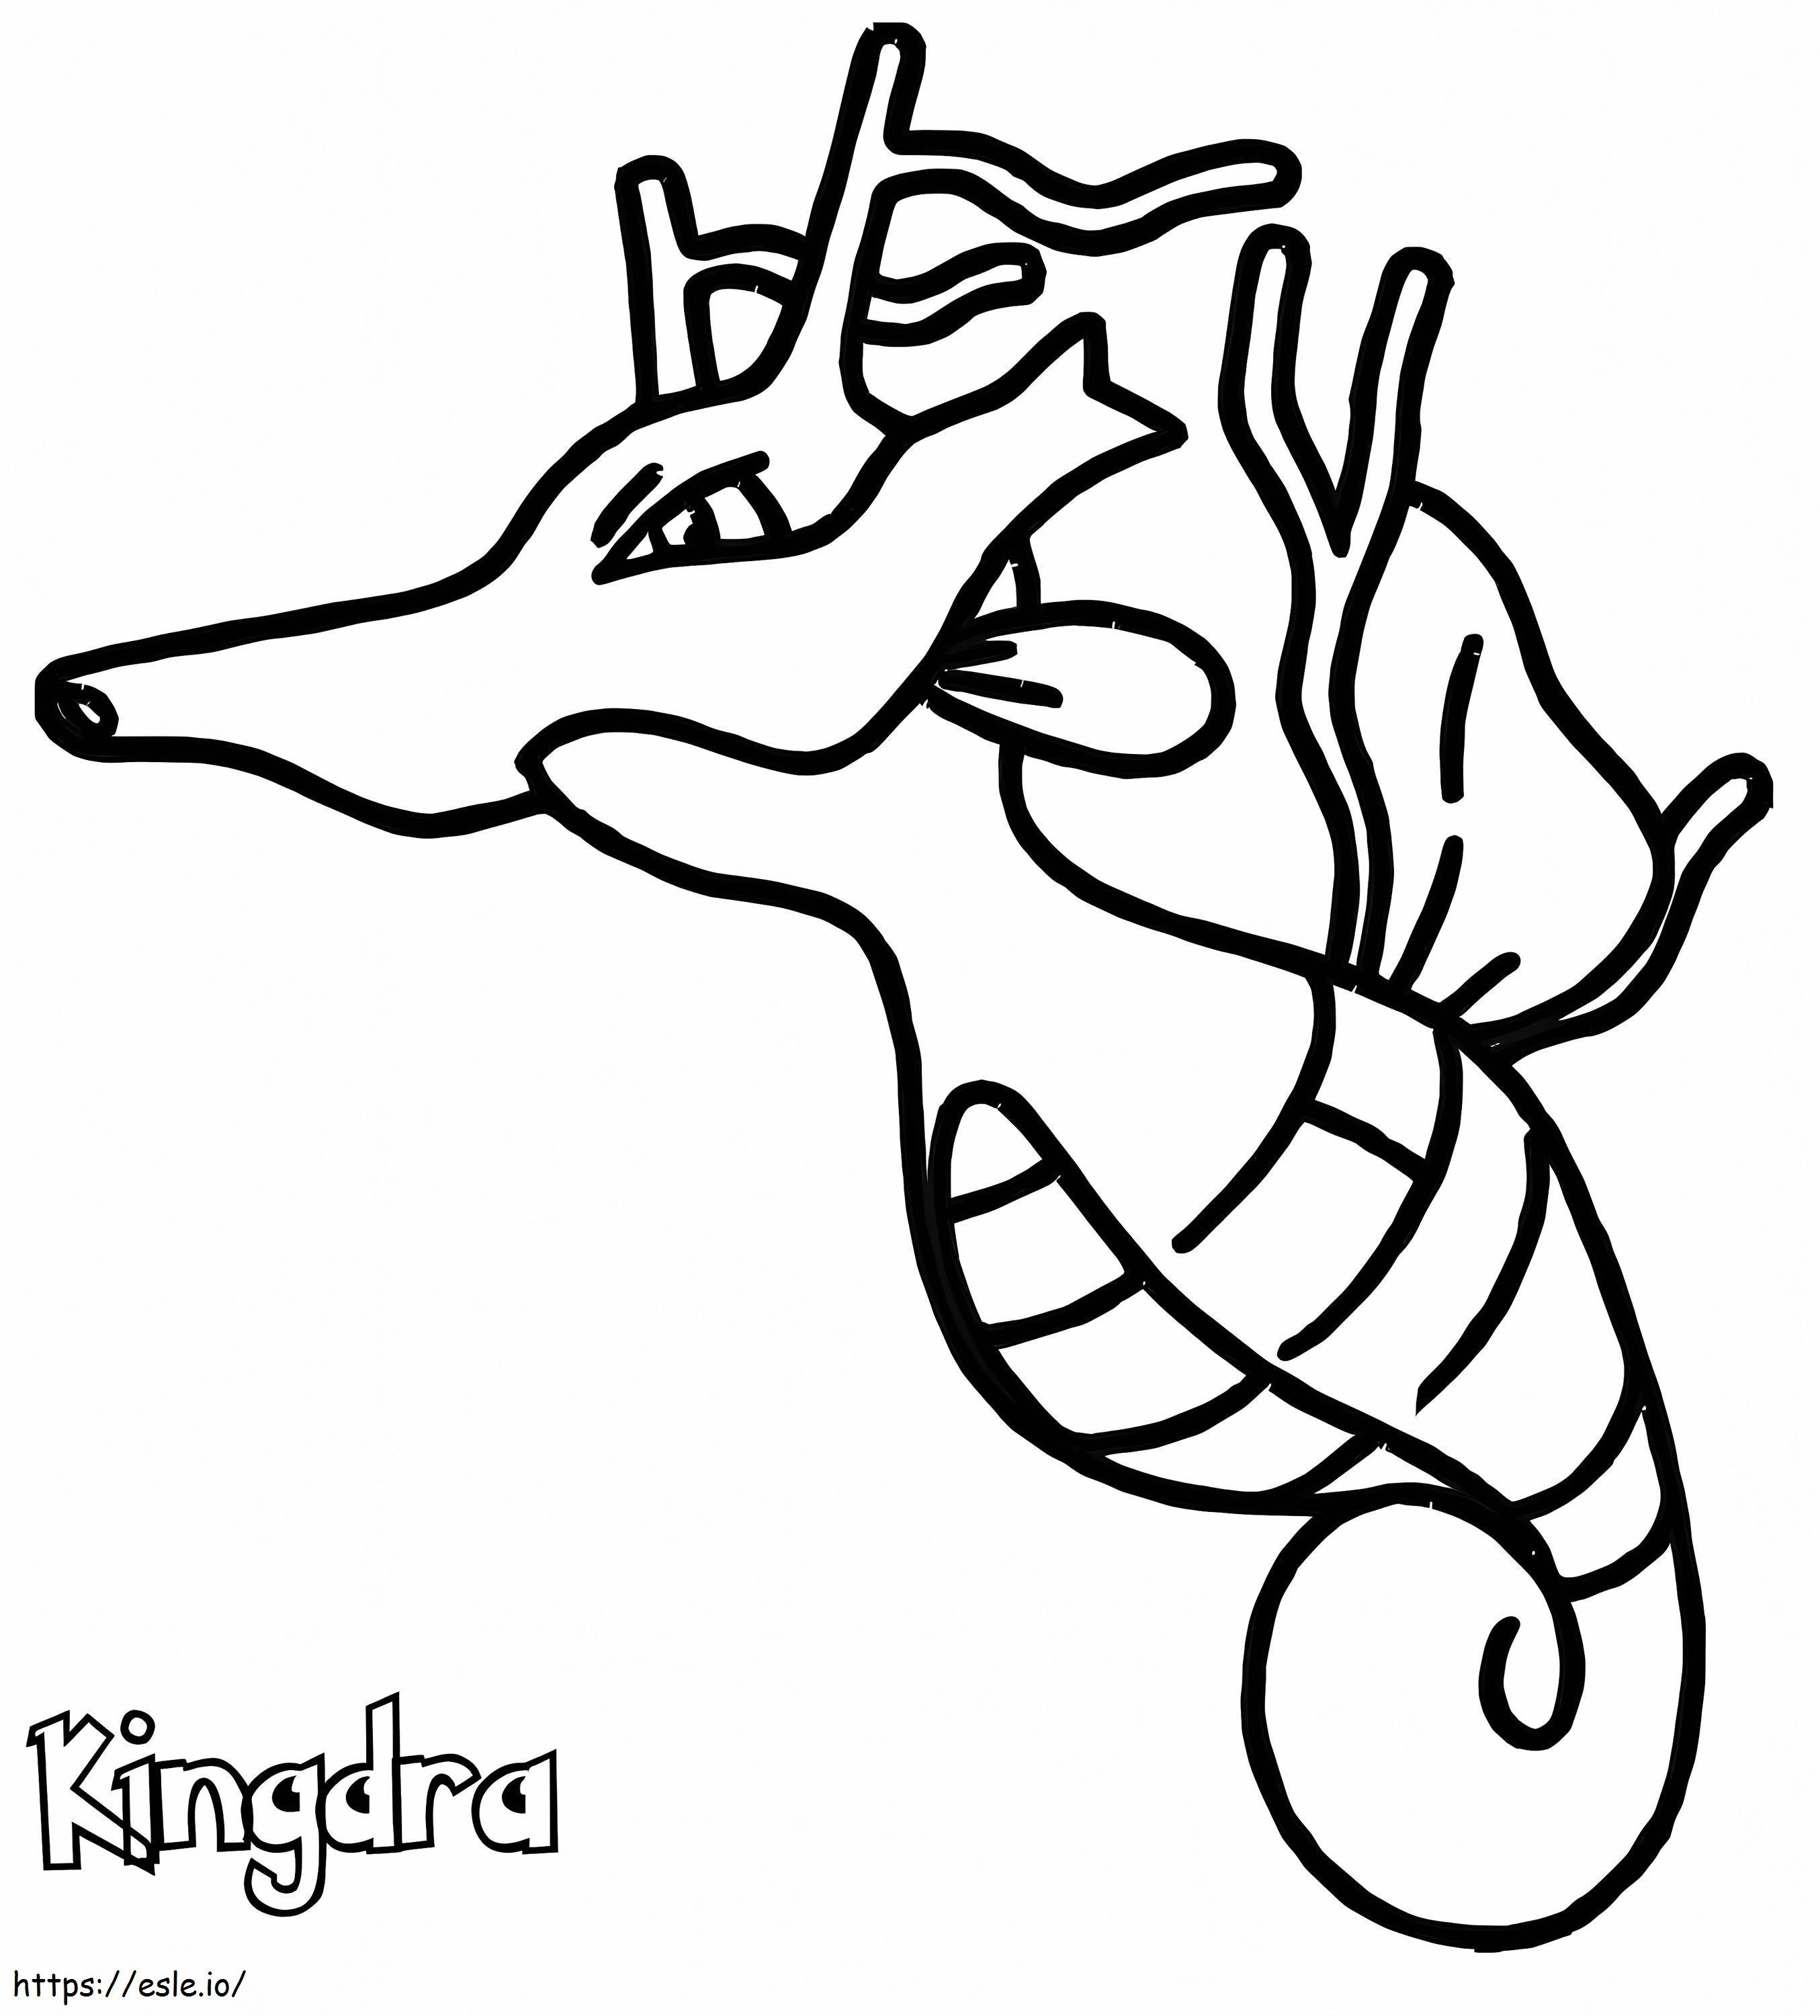 Pokemon Kingdra coloring page